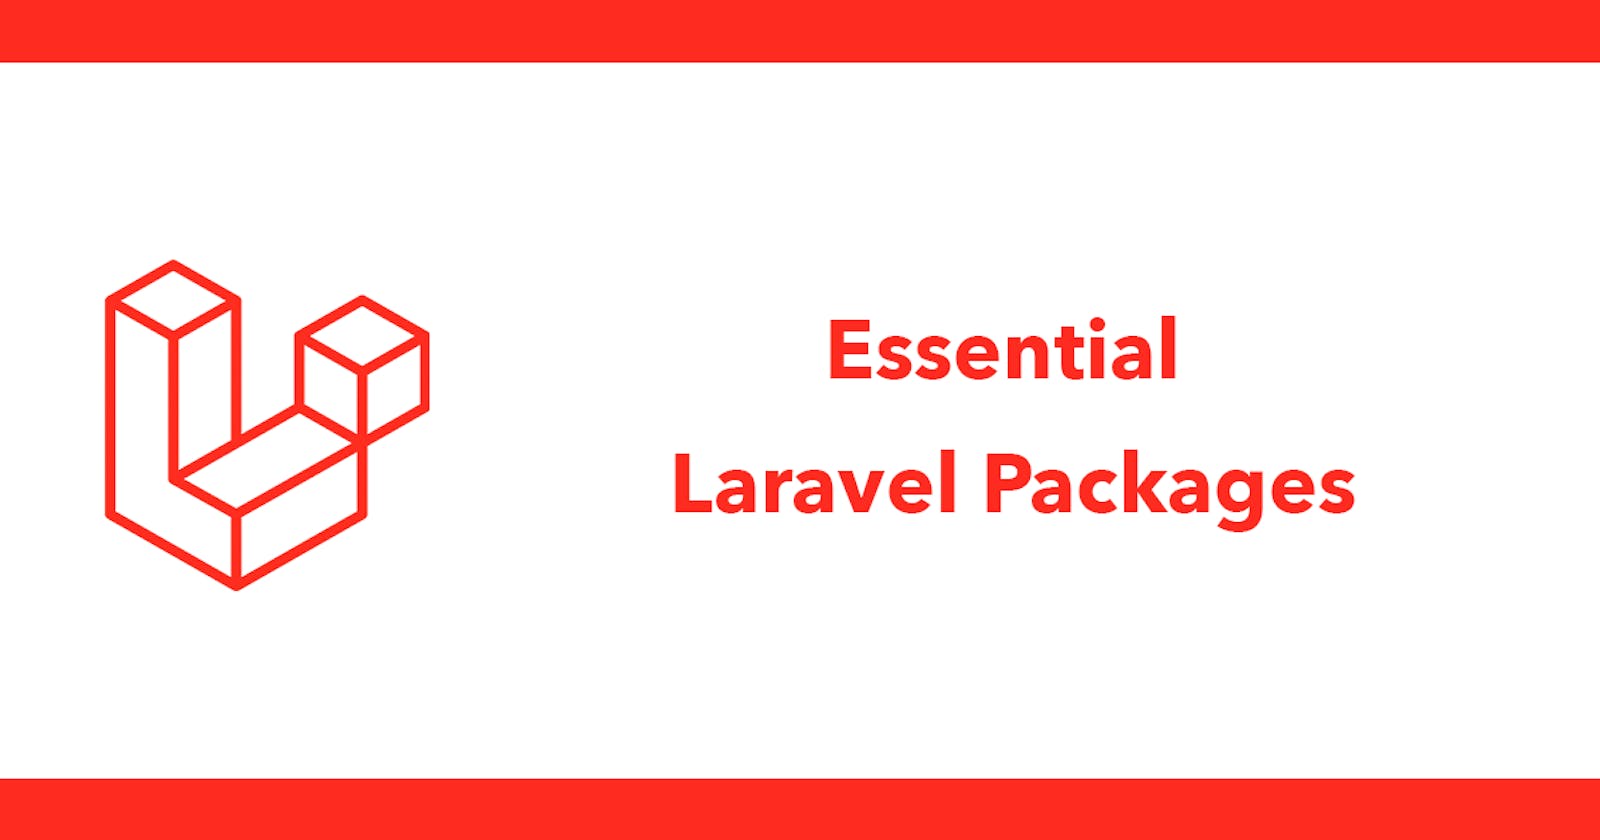 Essential Laravel Packages